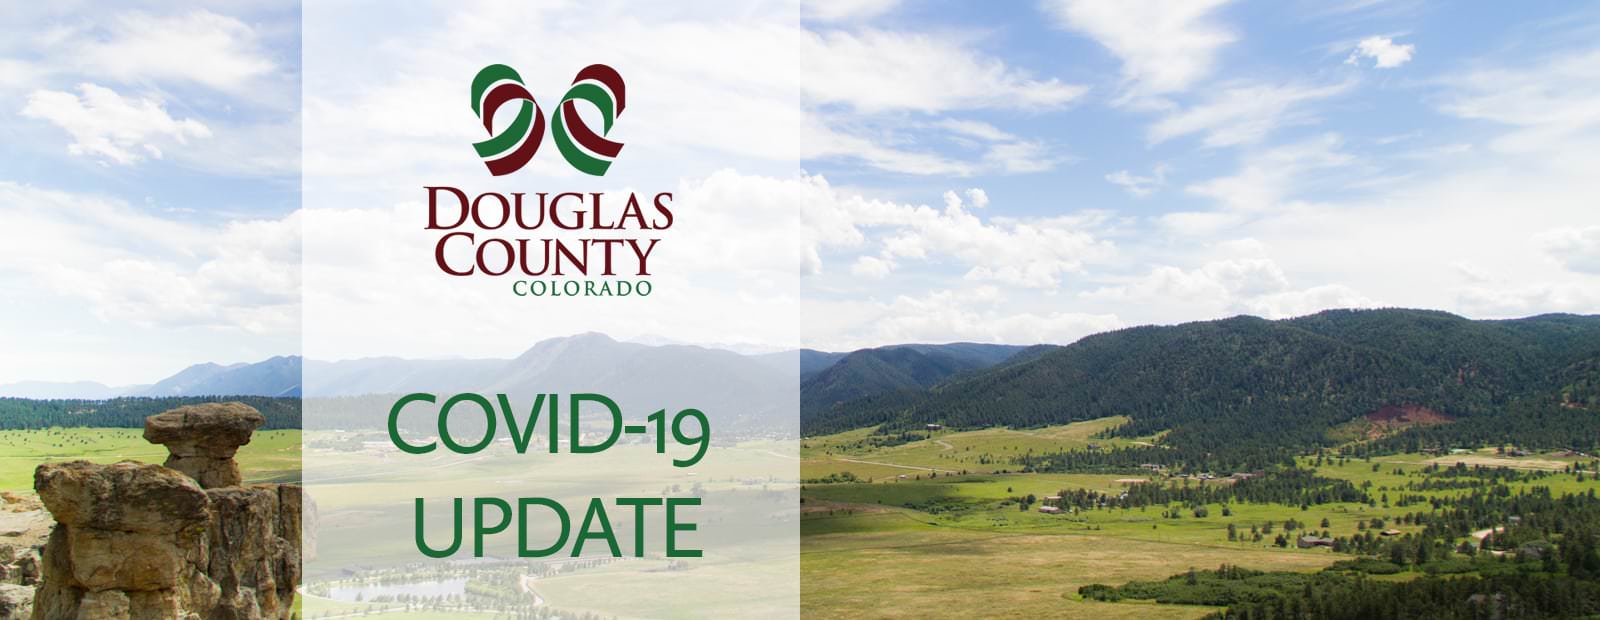 Douglas County COVID19 Update